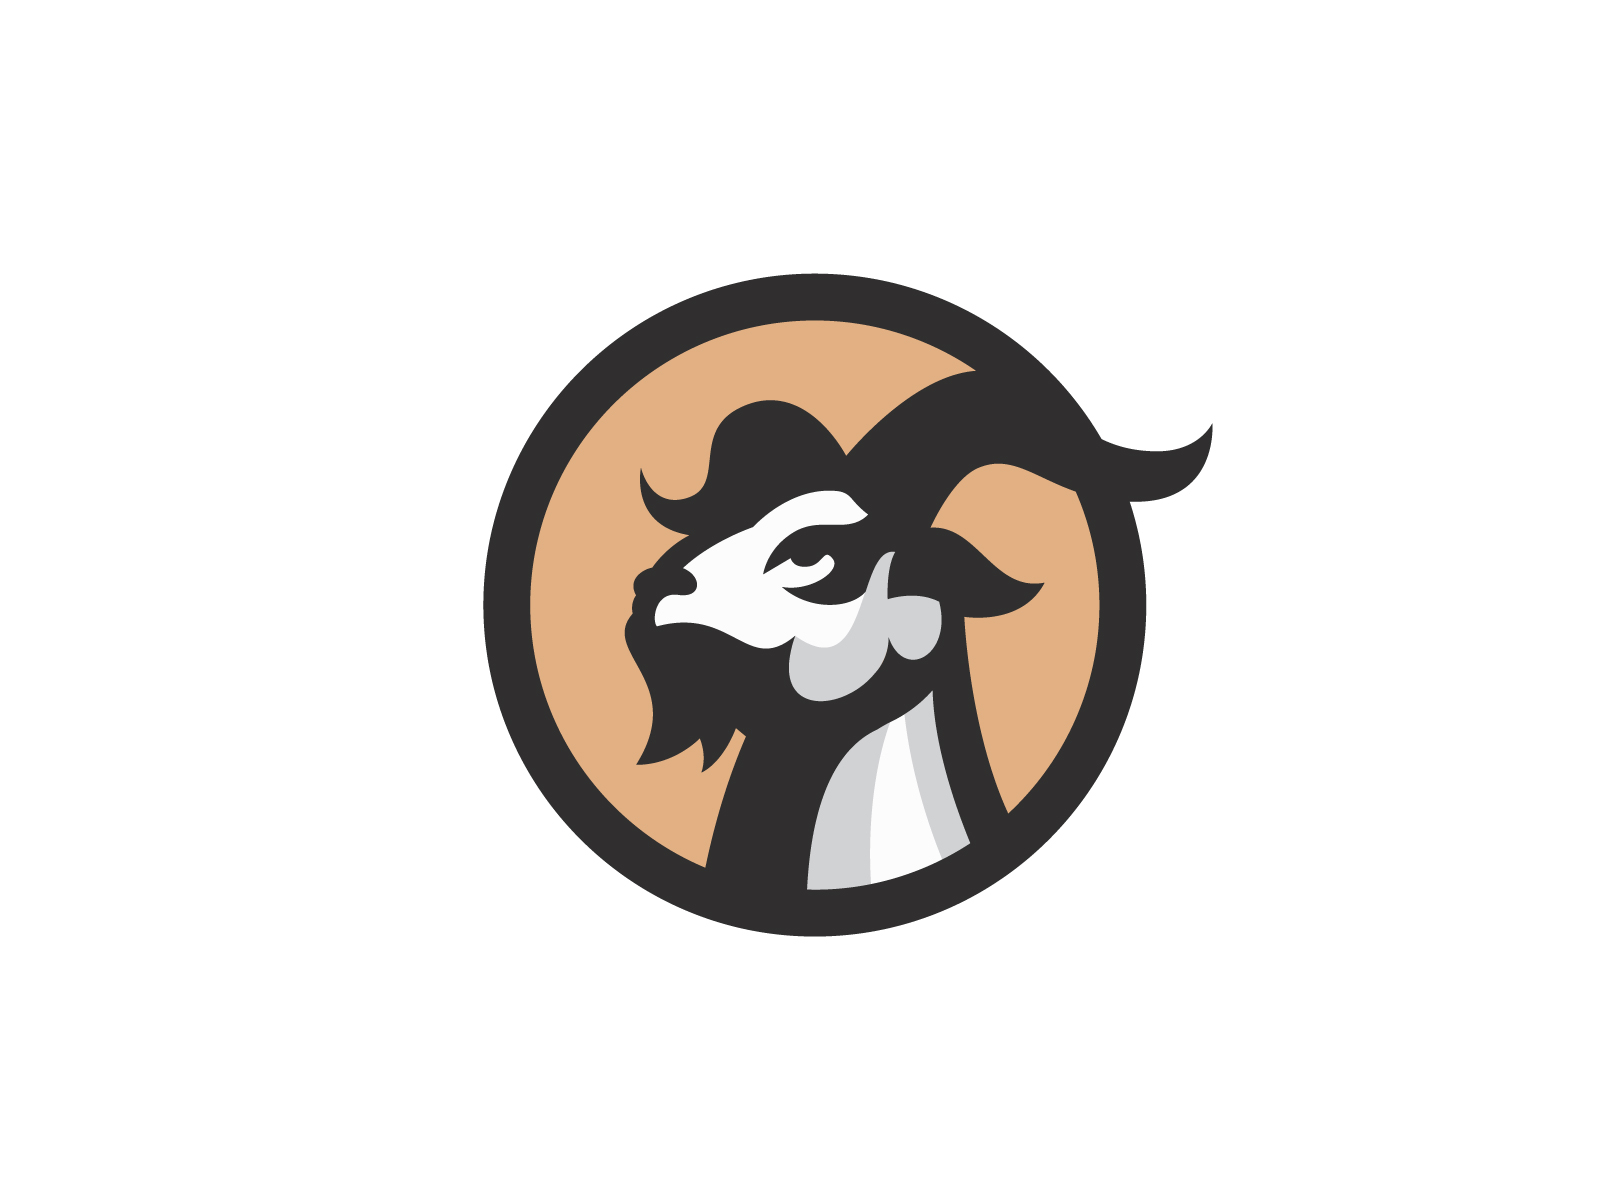 Sheep goat horns idea logo design vector icon illustration Aries - stock  vector 5838357 | Crushpixel